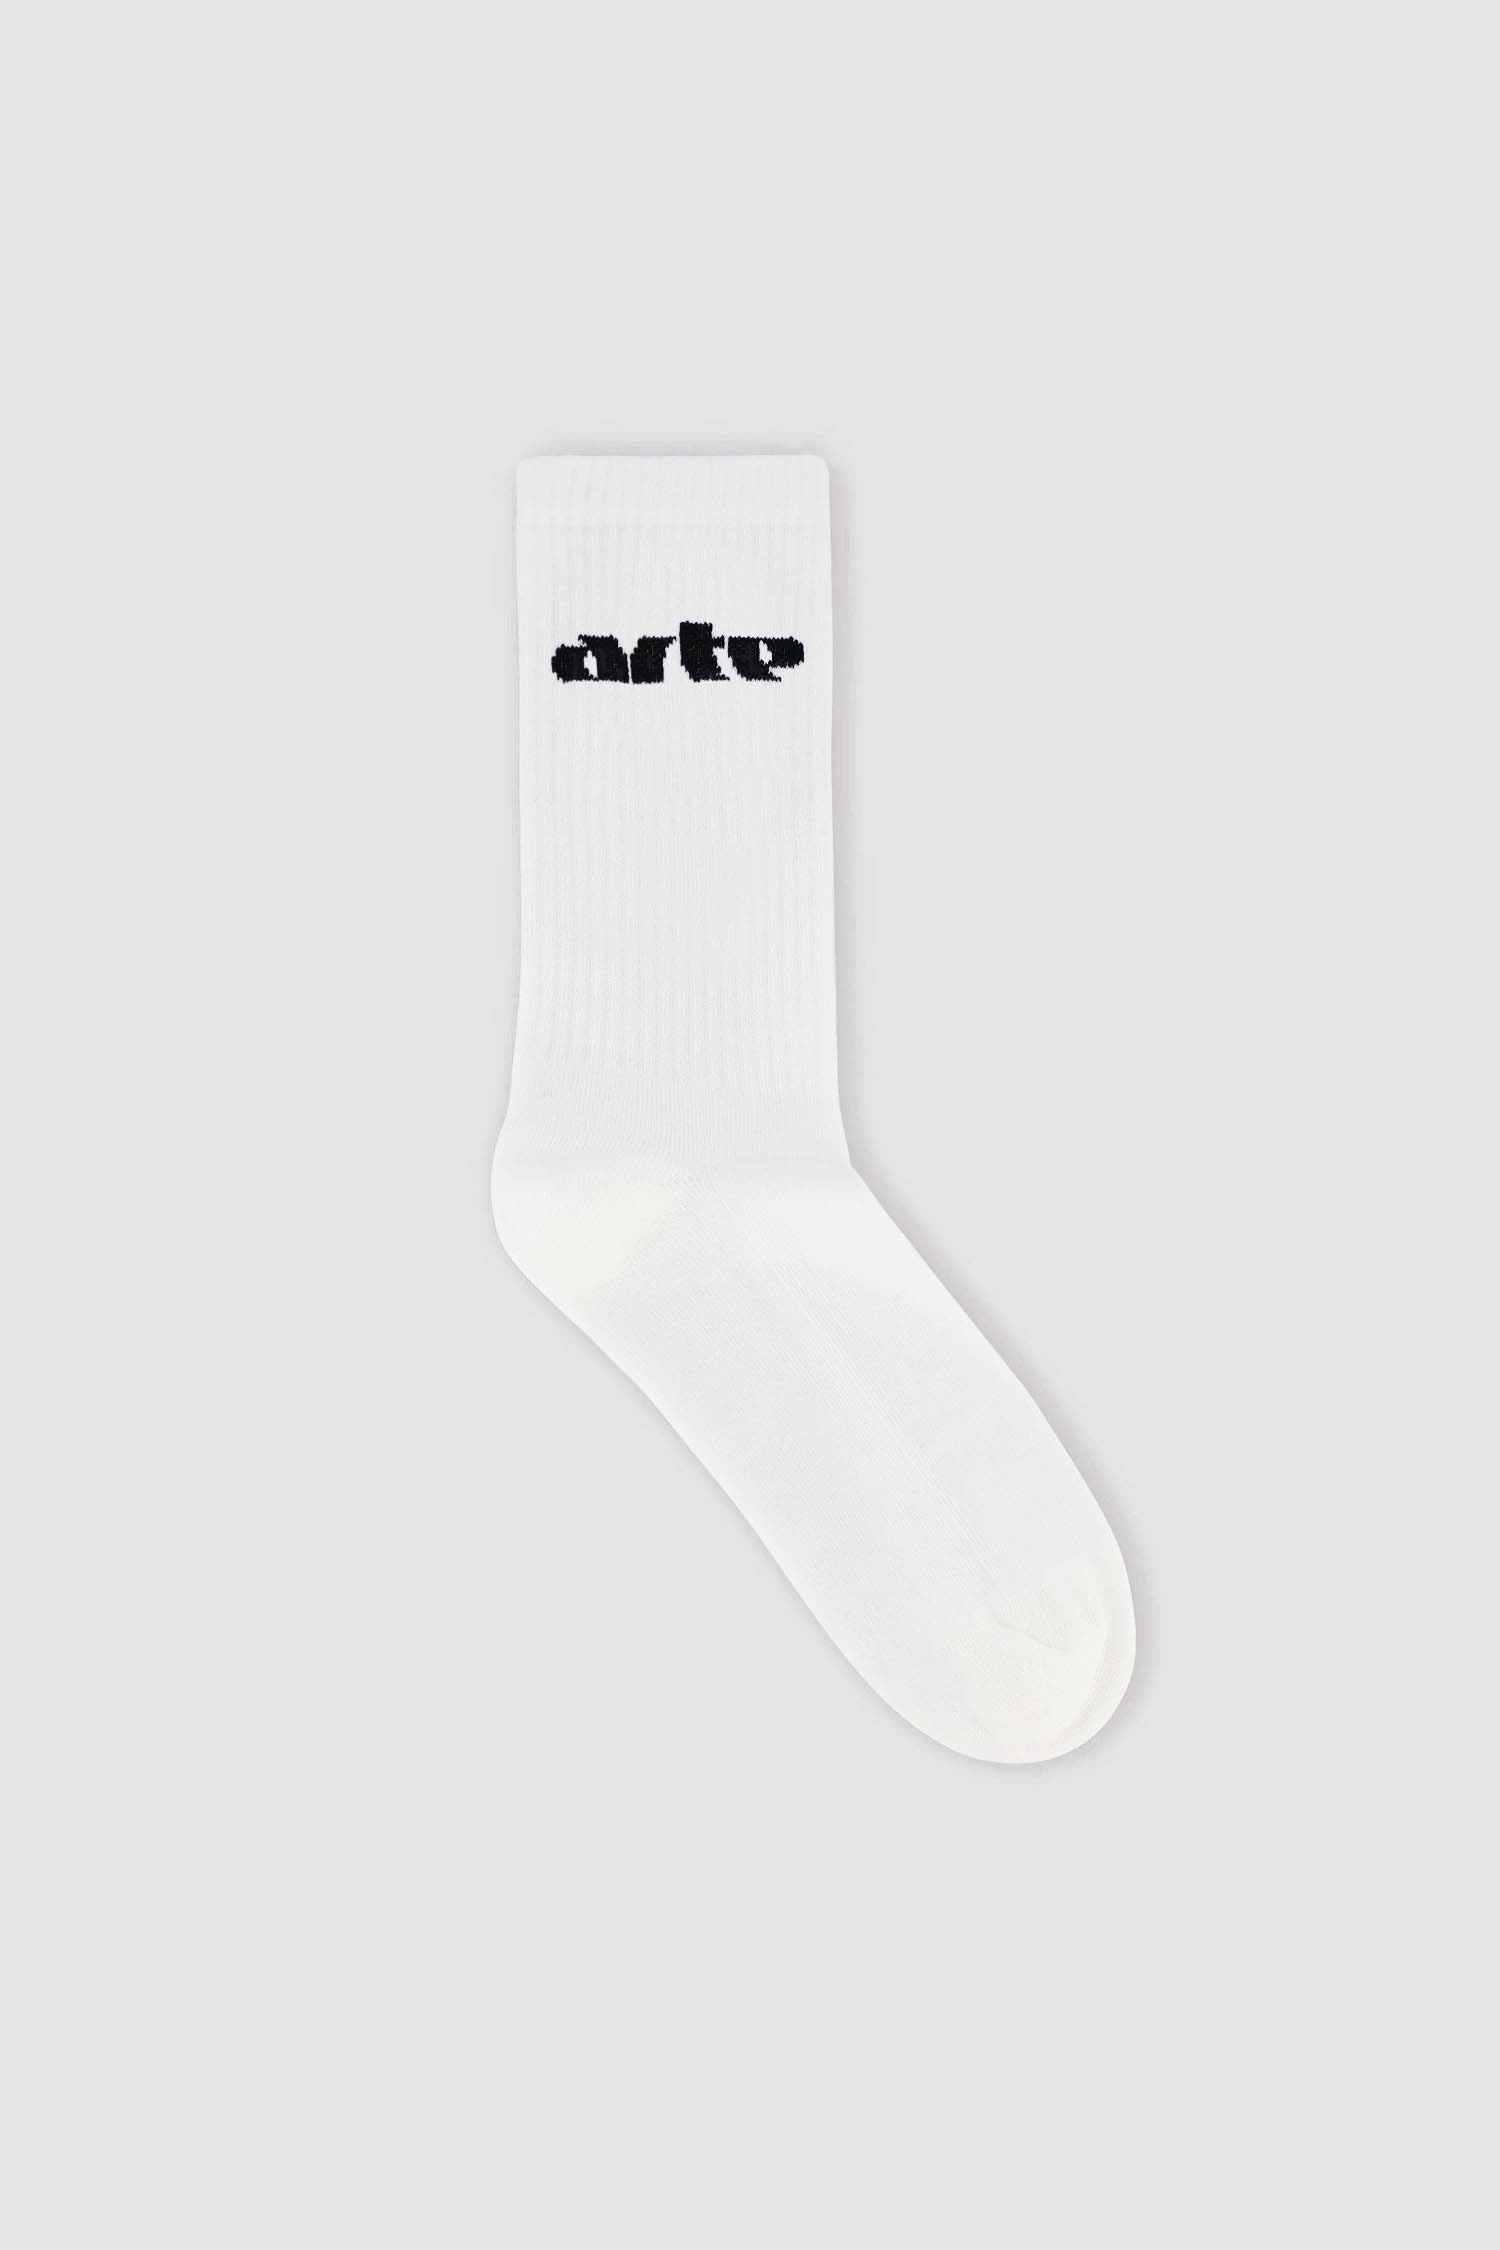 Arte Horizontal Socks - White